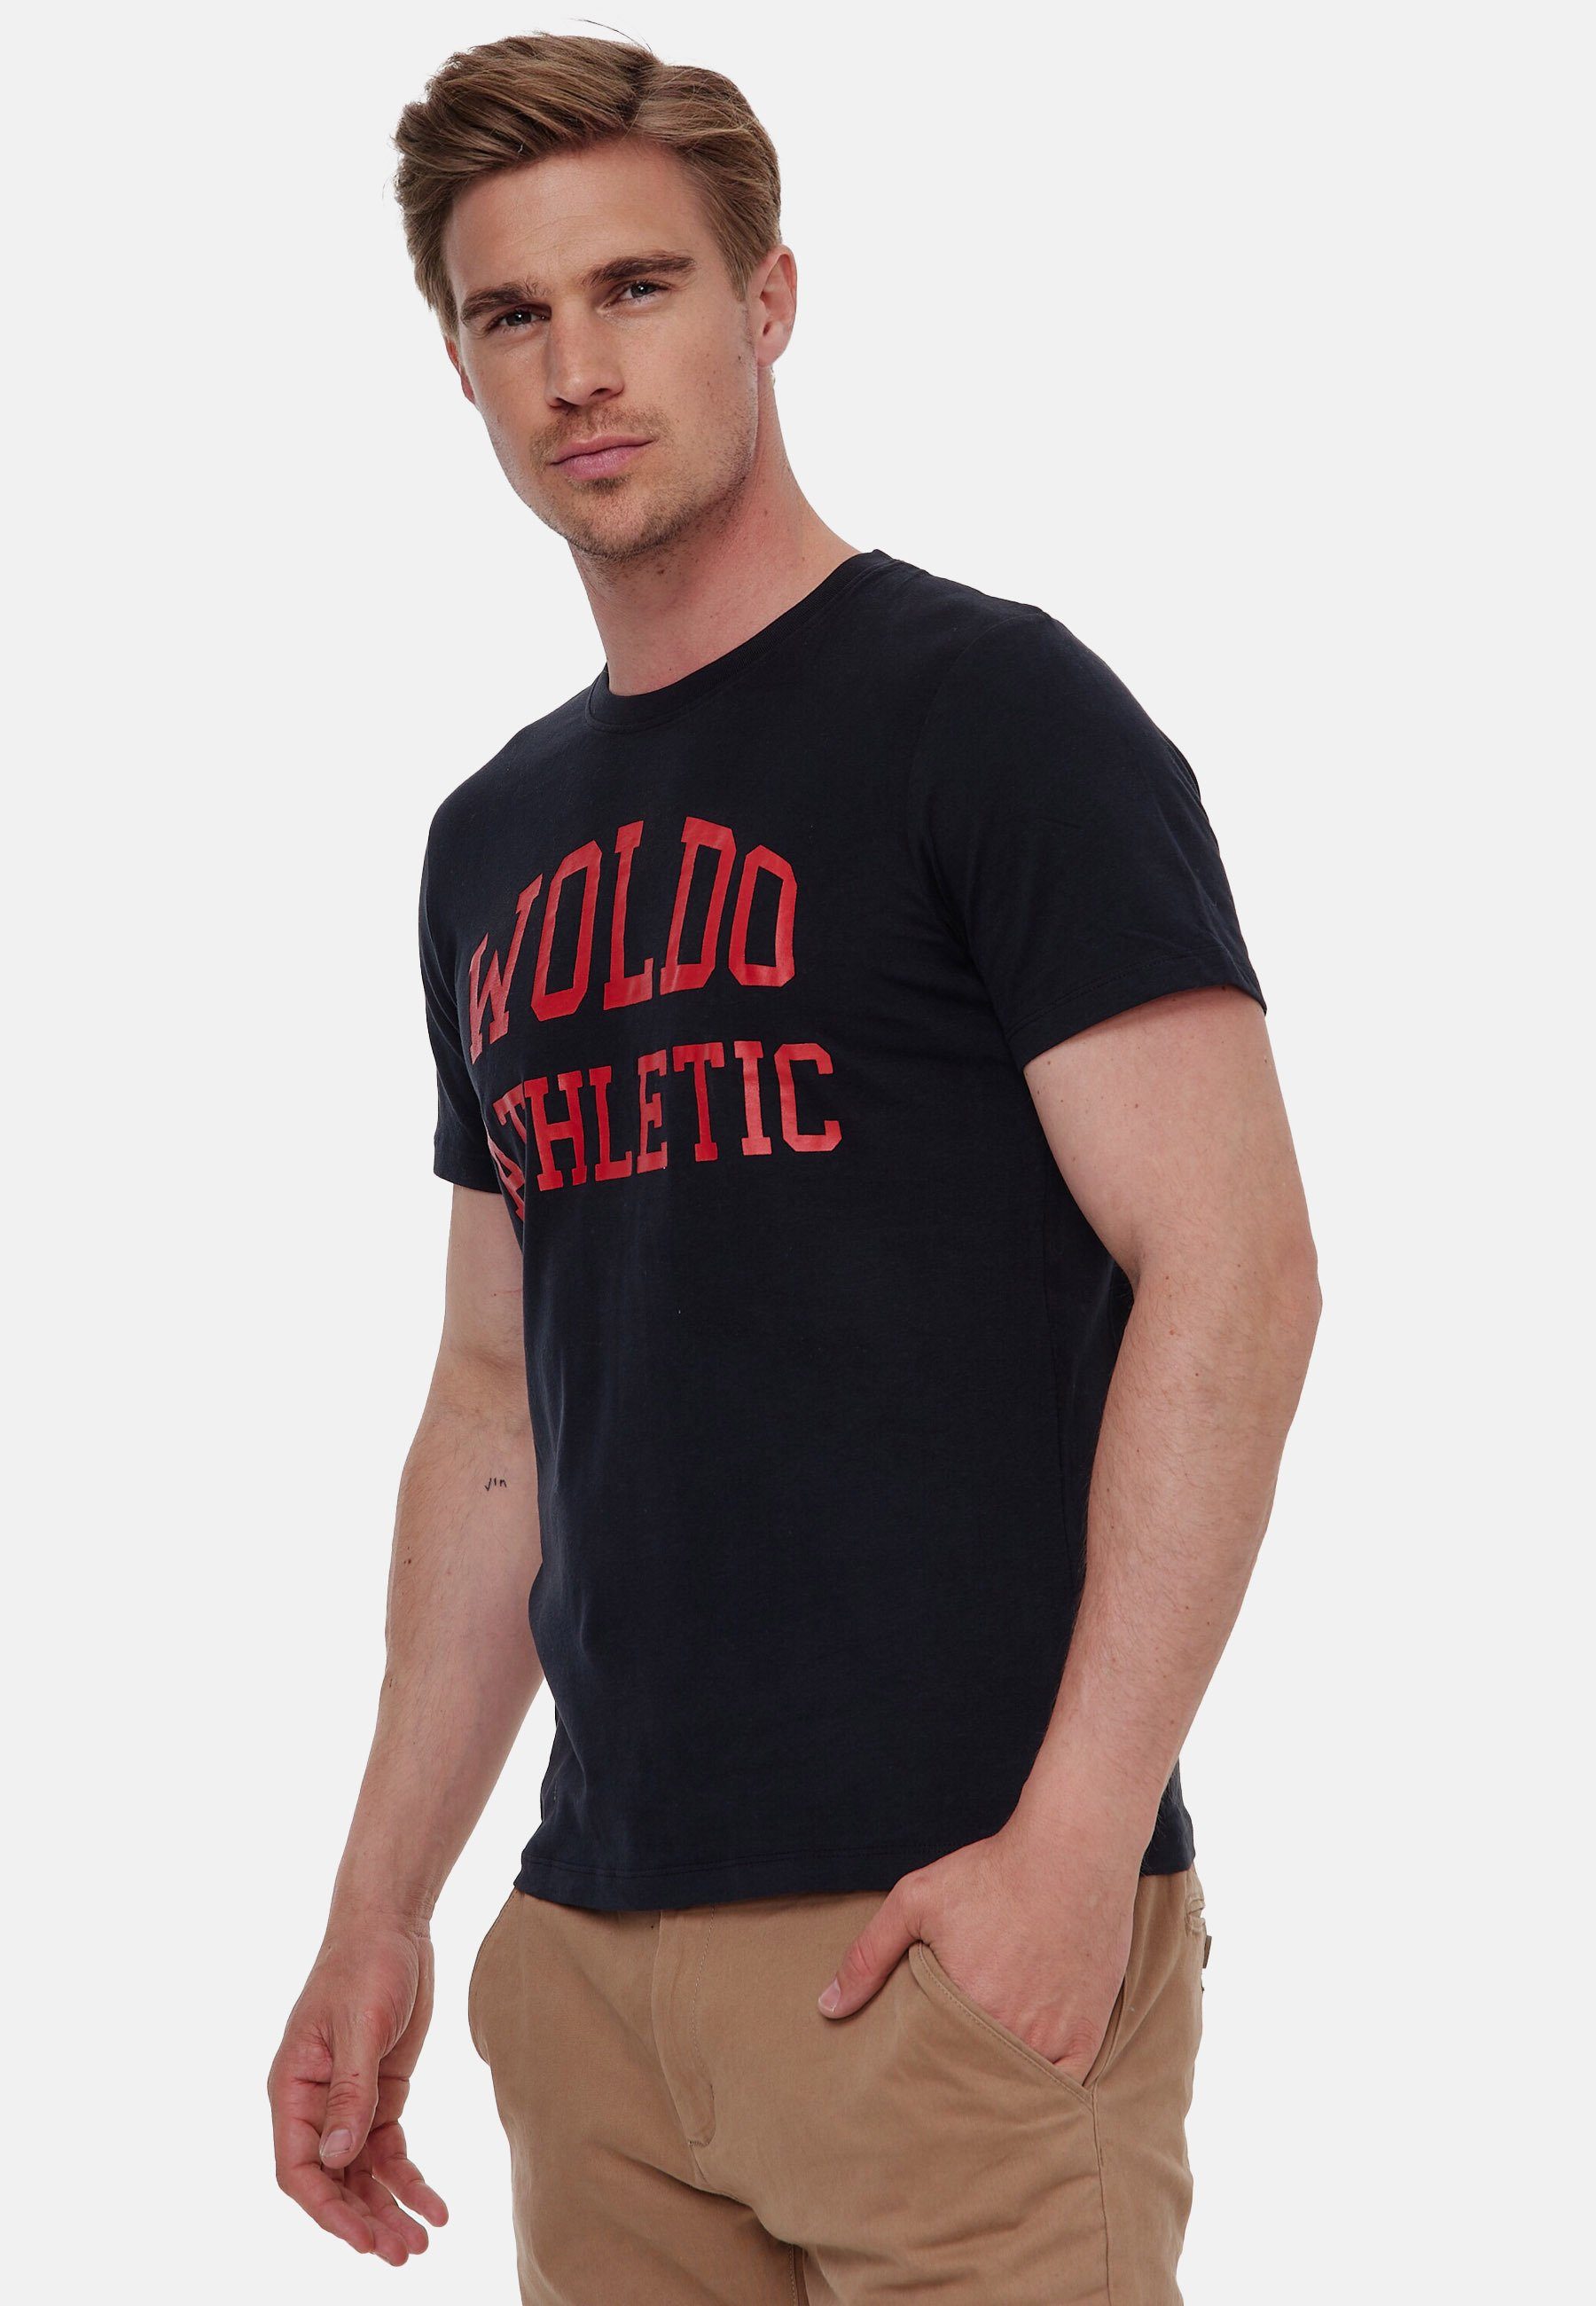 Logo Woldo T-Shirt T-Shirt schwarz-rot Athletic Big